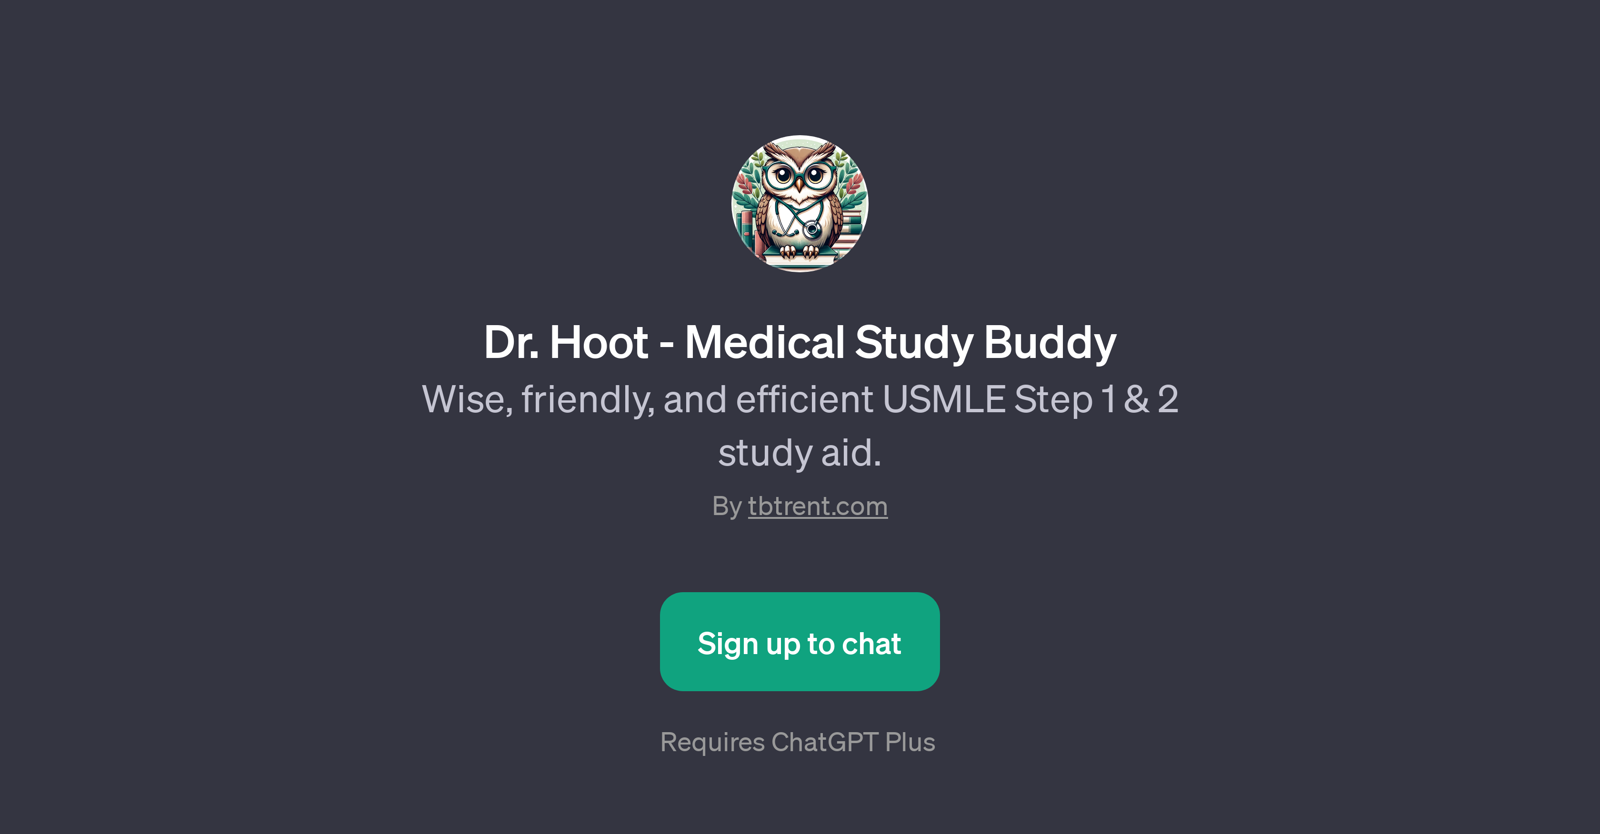 Dr. Hoot - Medical Study Buddy website